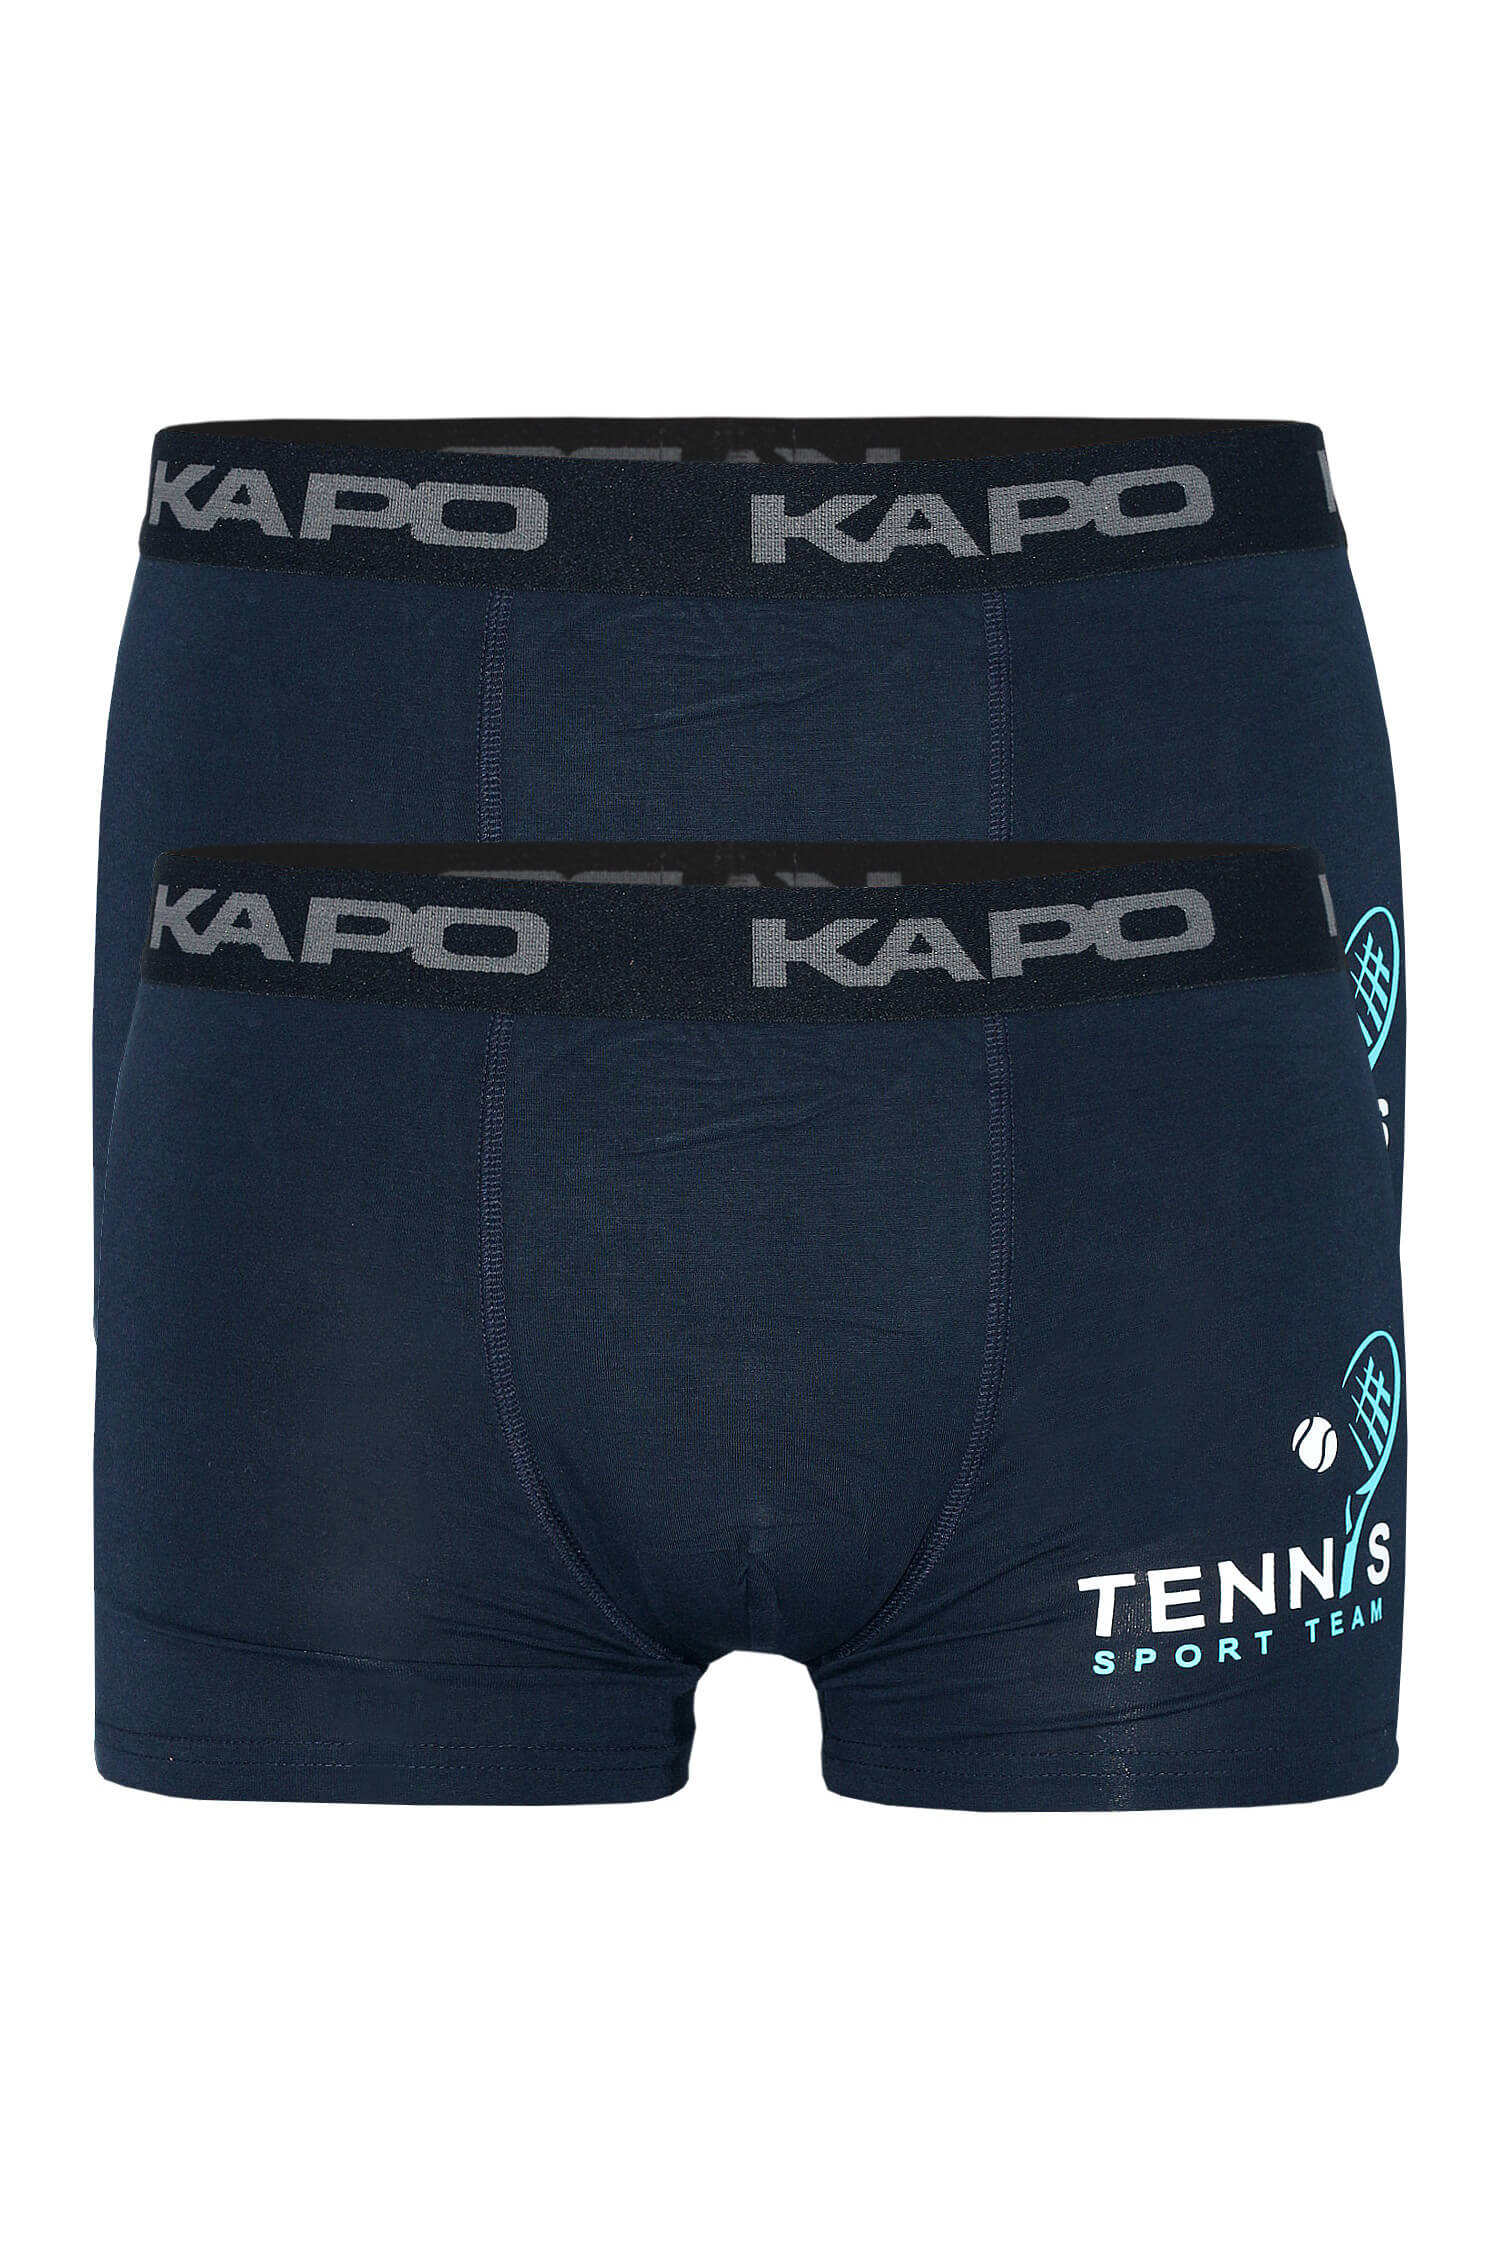 Rafael Kapo tenis boxerky - dvojbal XXL tmavě modrá